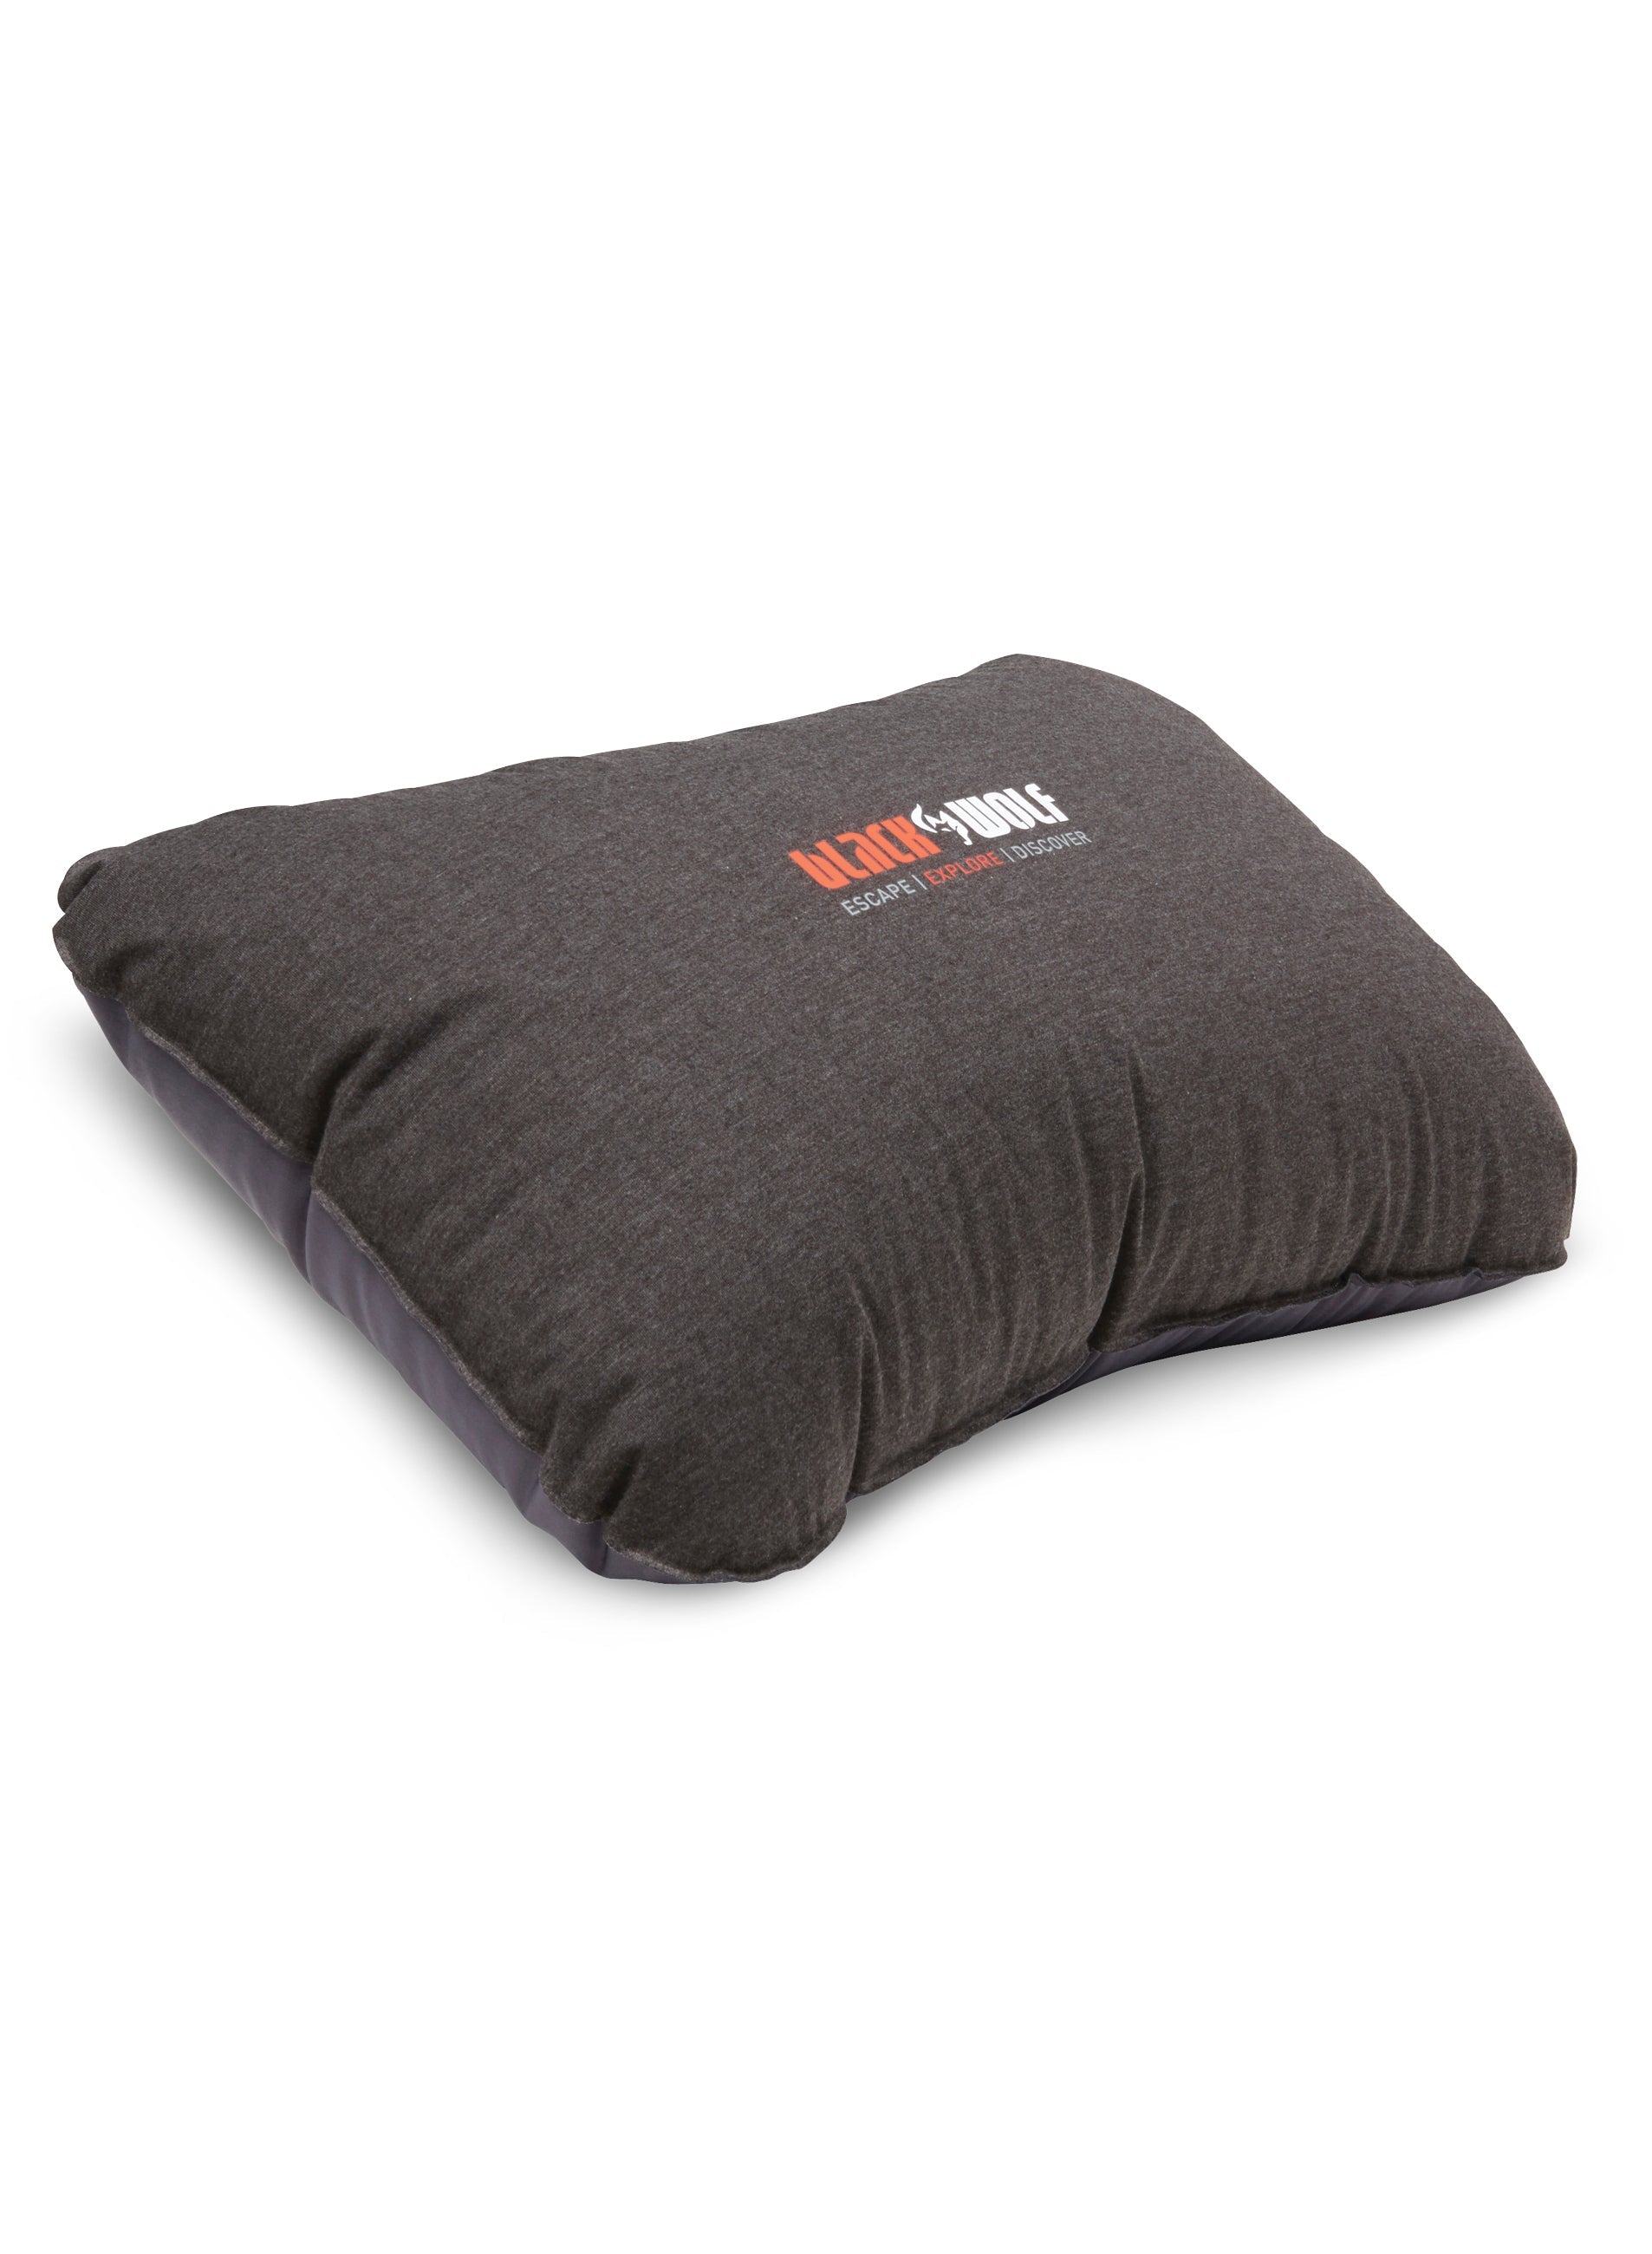 Black Wolf - Comfort Pillow XL - Black-1